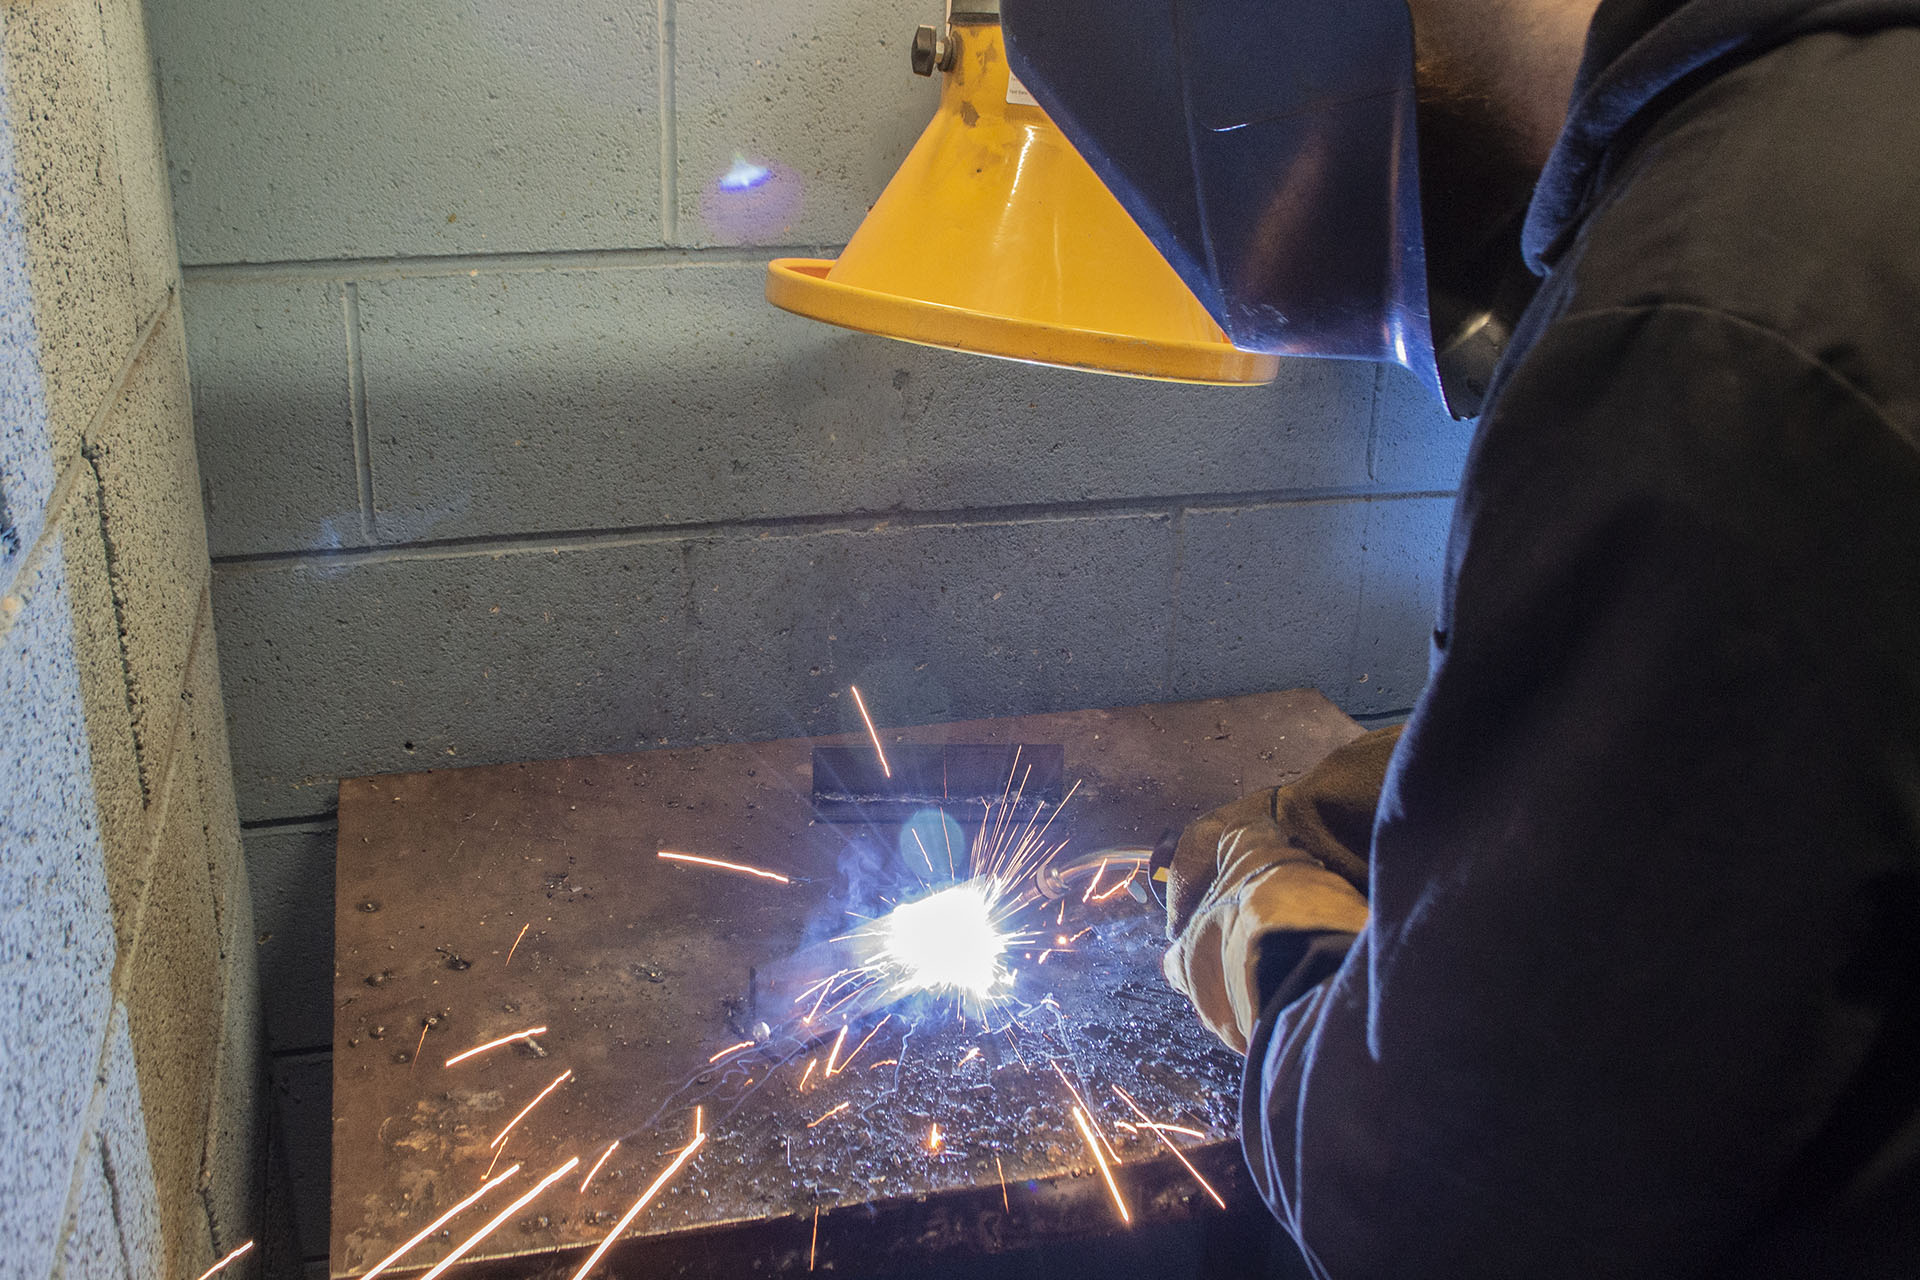 Welding. Student welding whilst wearing safety gear